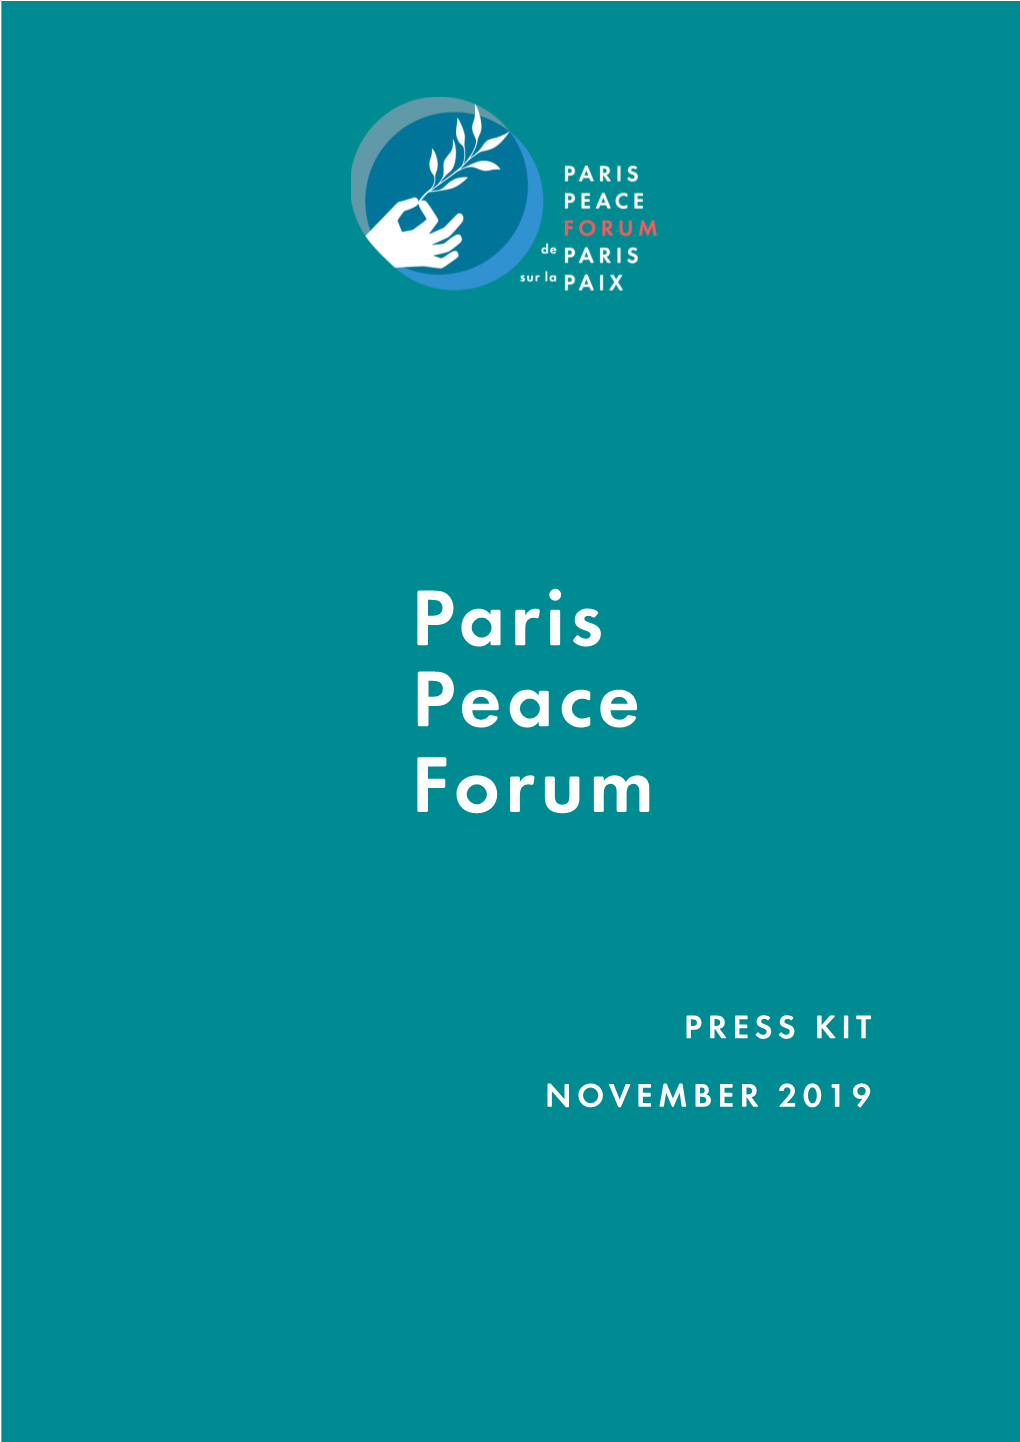 Paris Forum Peace